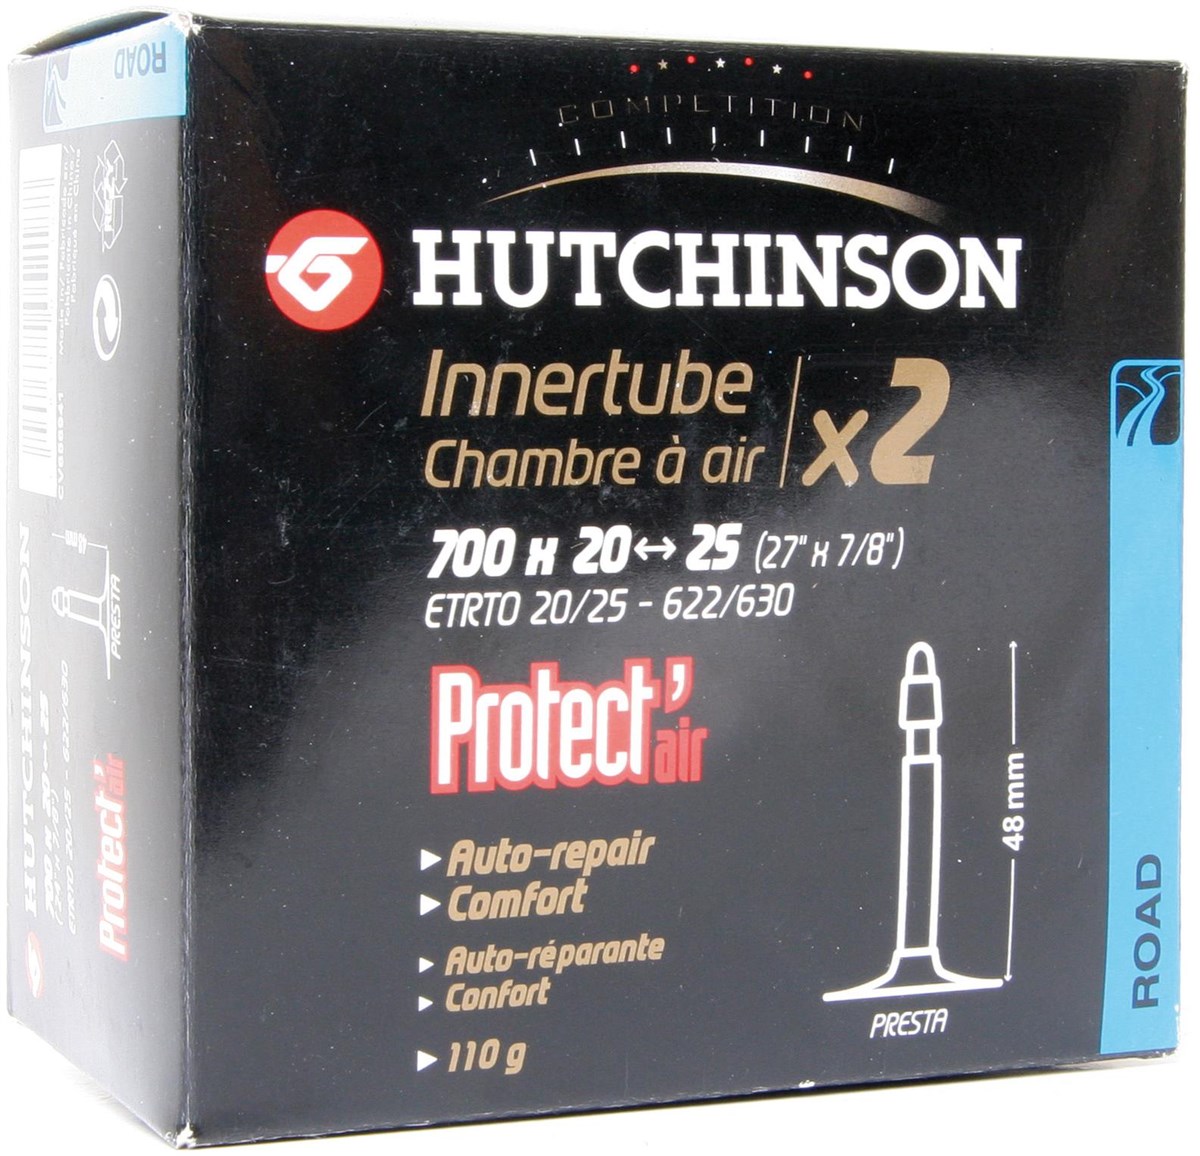 Hutchinson Protect Air Road Tube product image